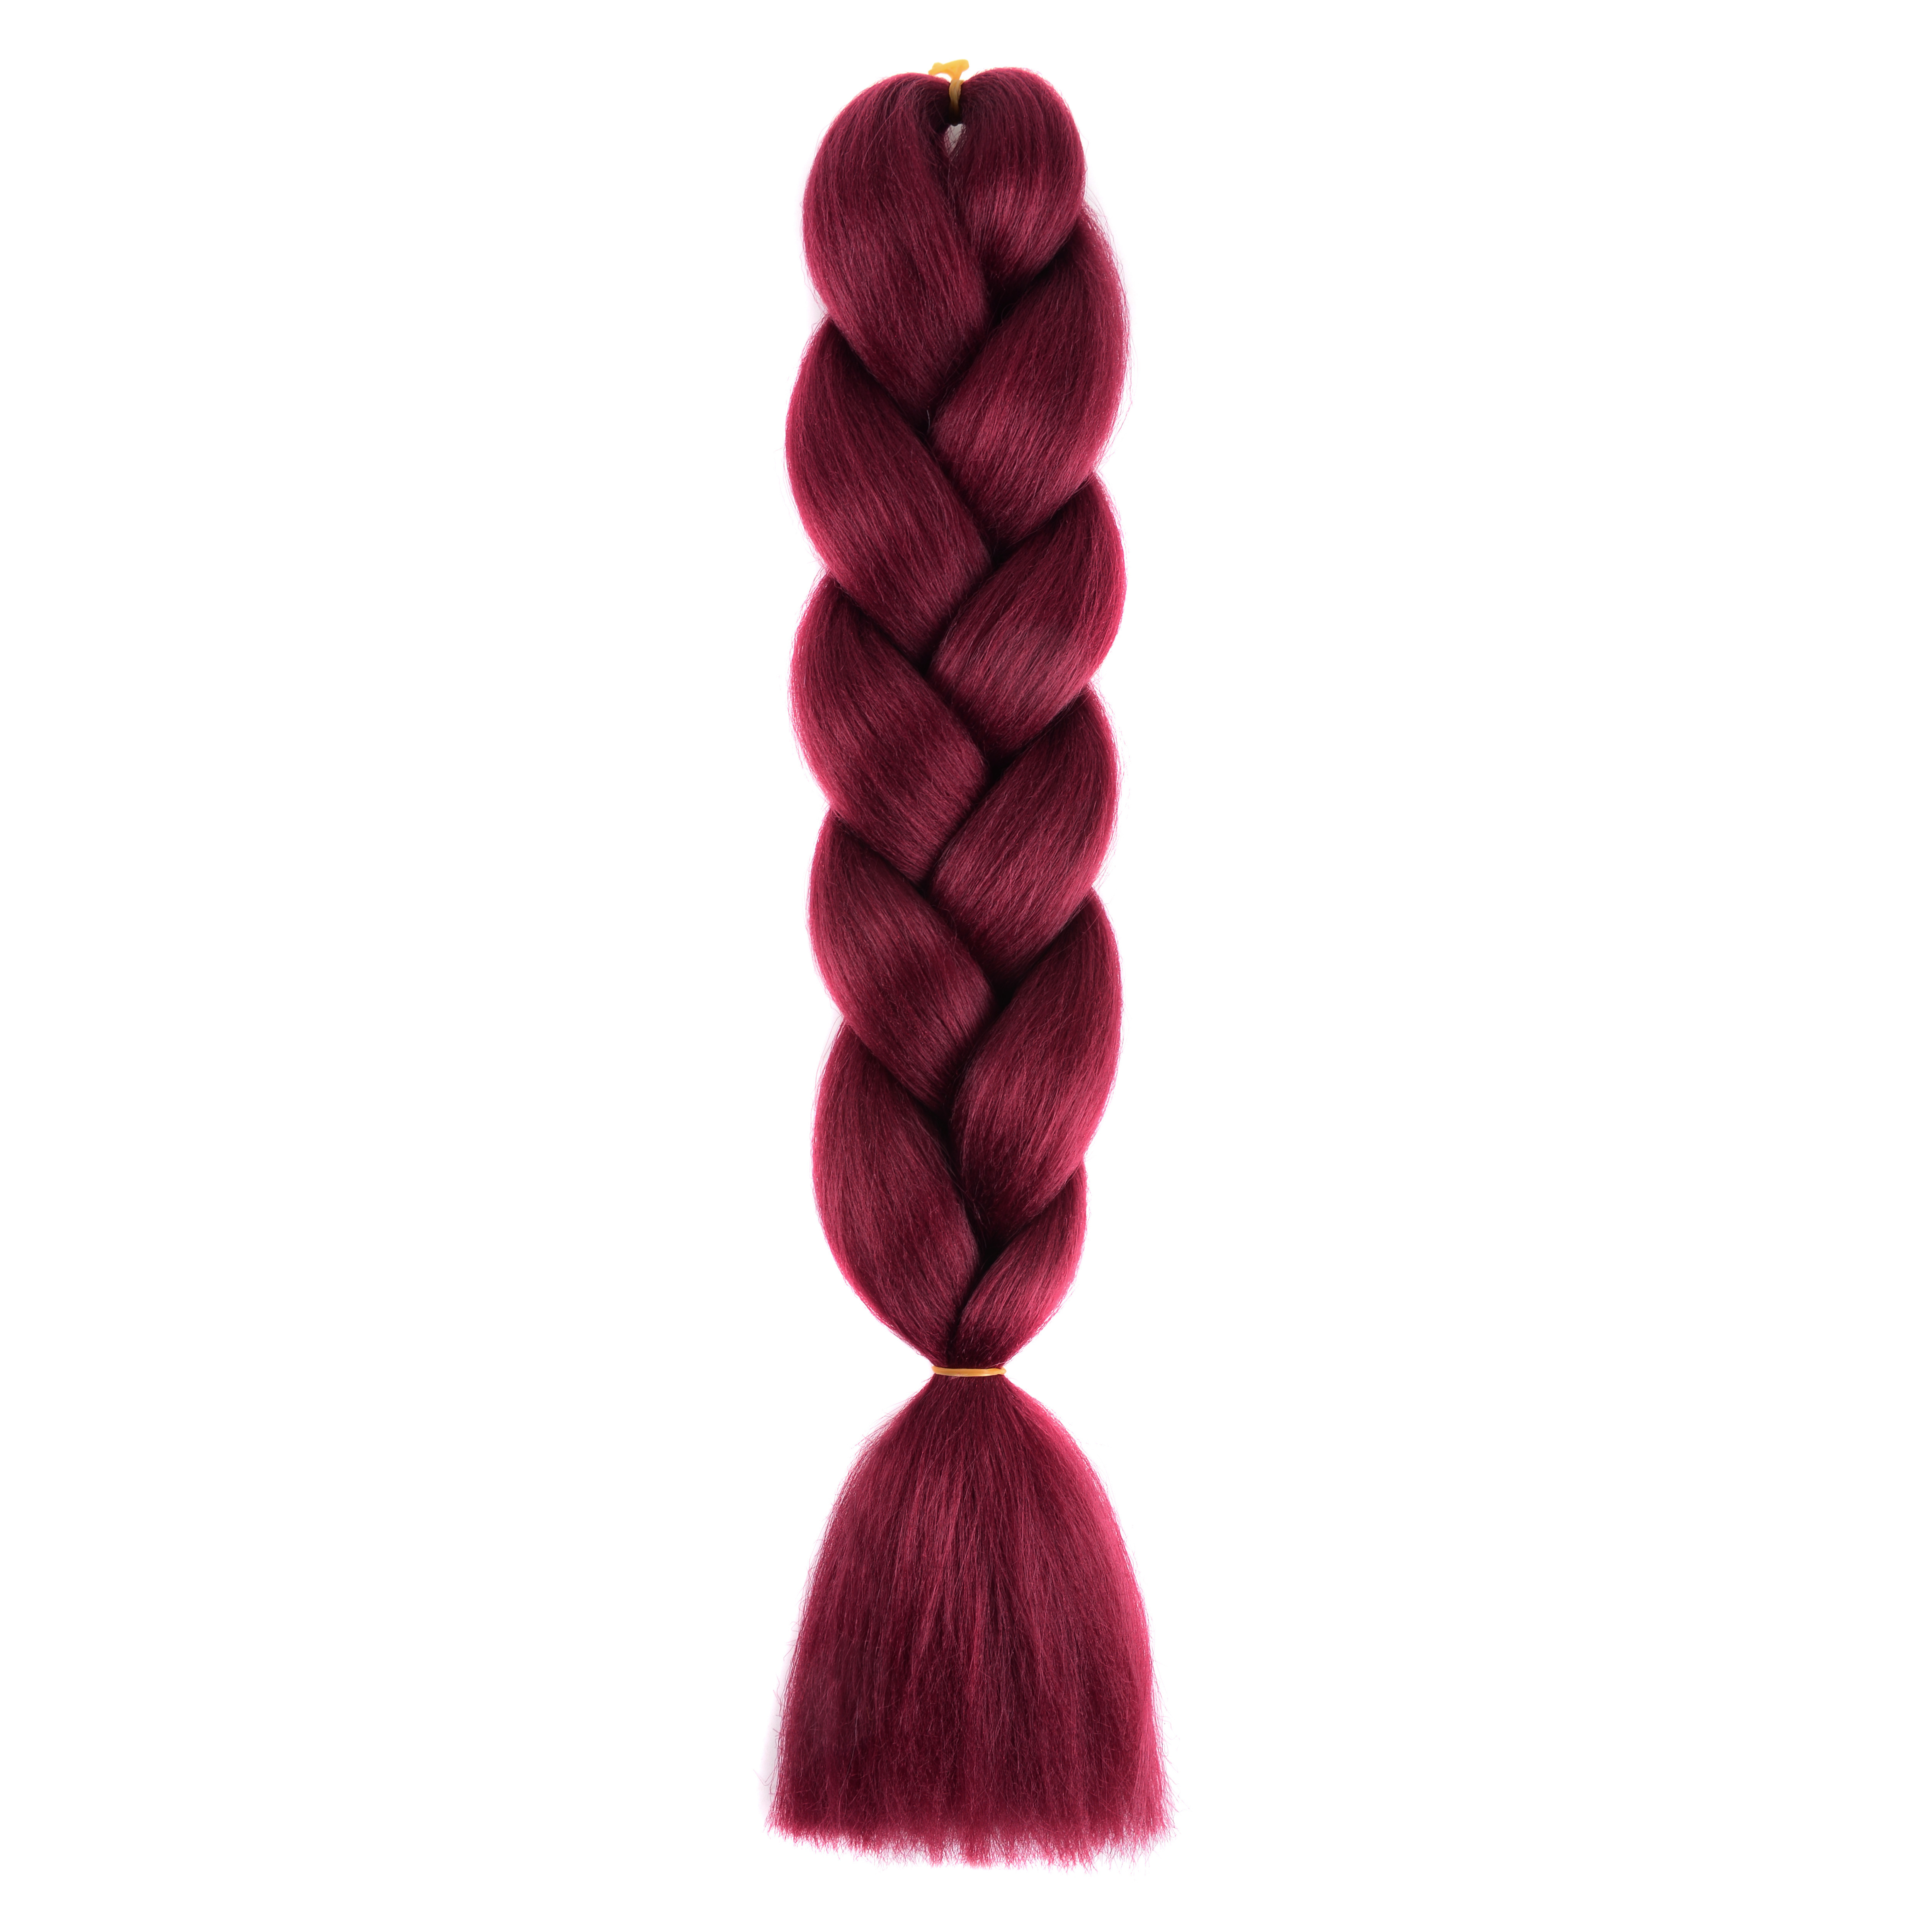 Burgundy jumbo bulk braiding extensions hair | crotchet braiding hair